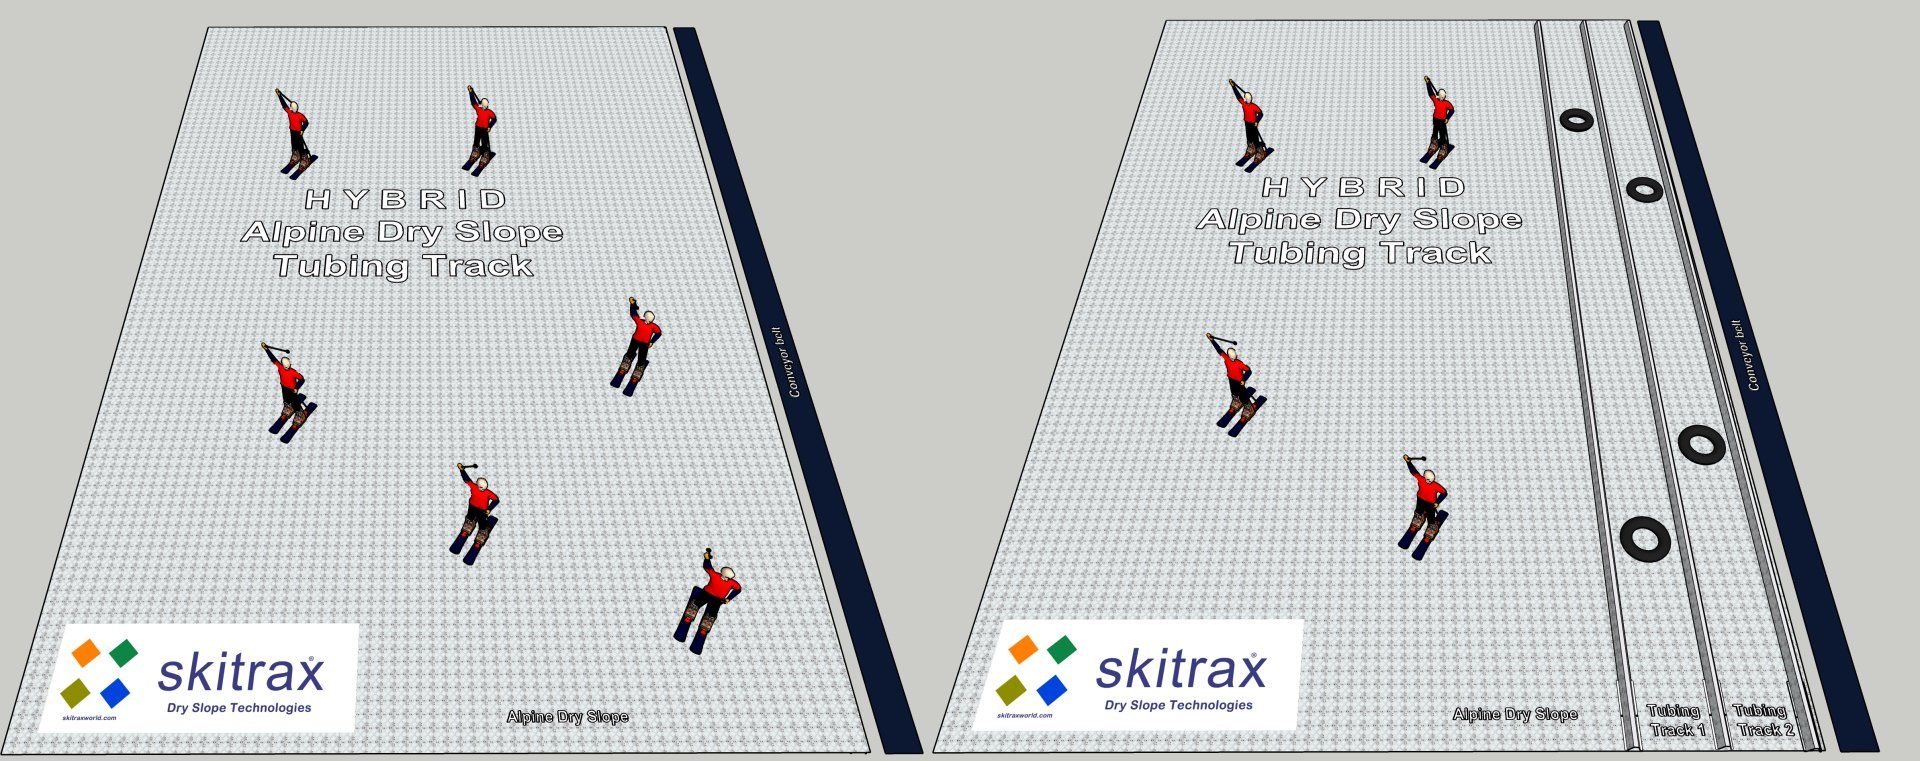 Hybrid dry slope - tubing track - skitrax world